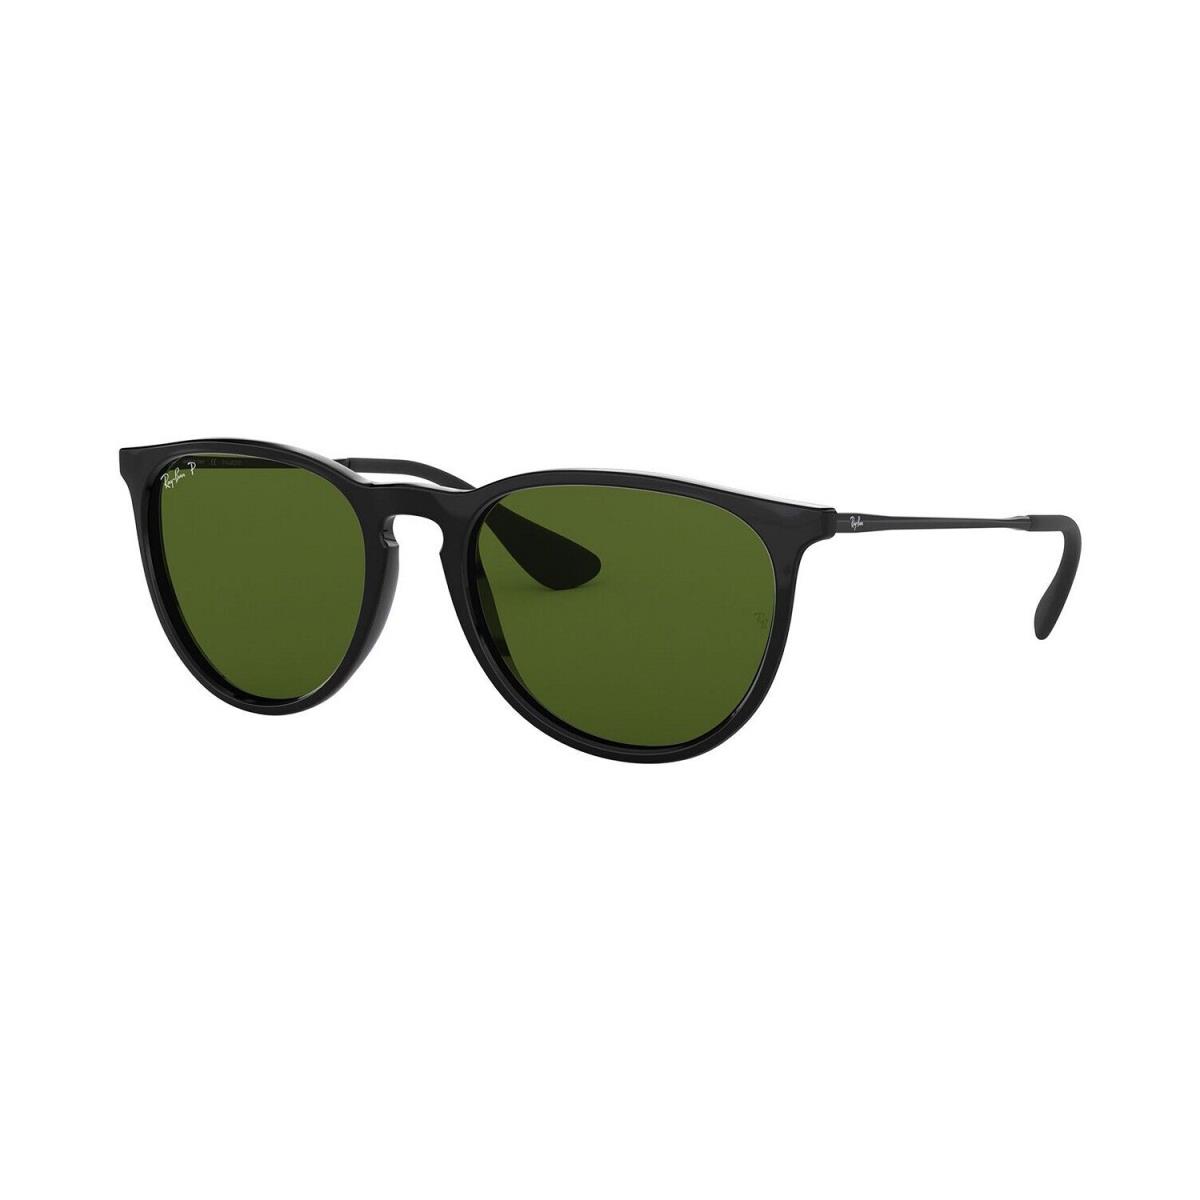 Ray-ban RB4171 601/2P Erika Fashion Polarized Sunglasses Black/green - Frame: Black, Lens: Green